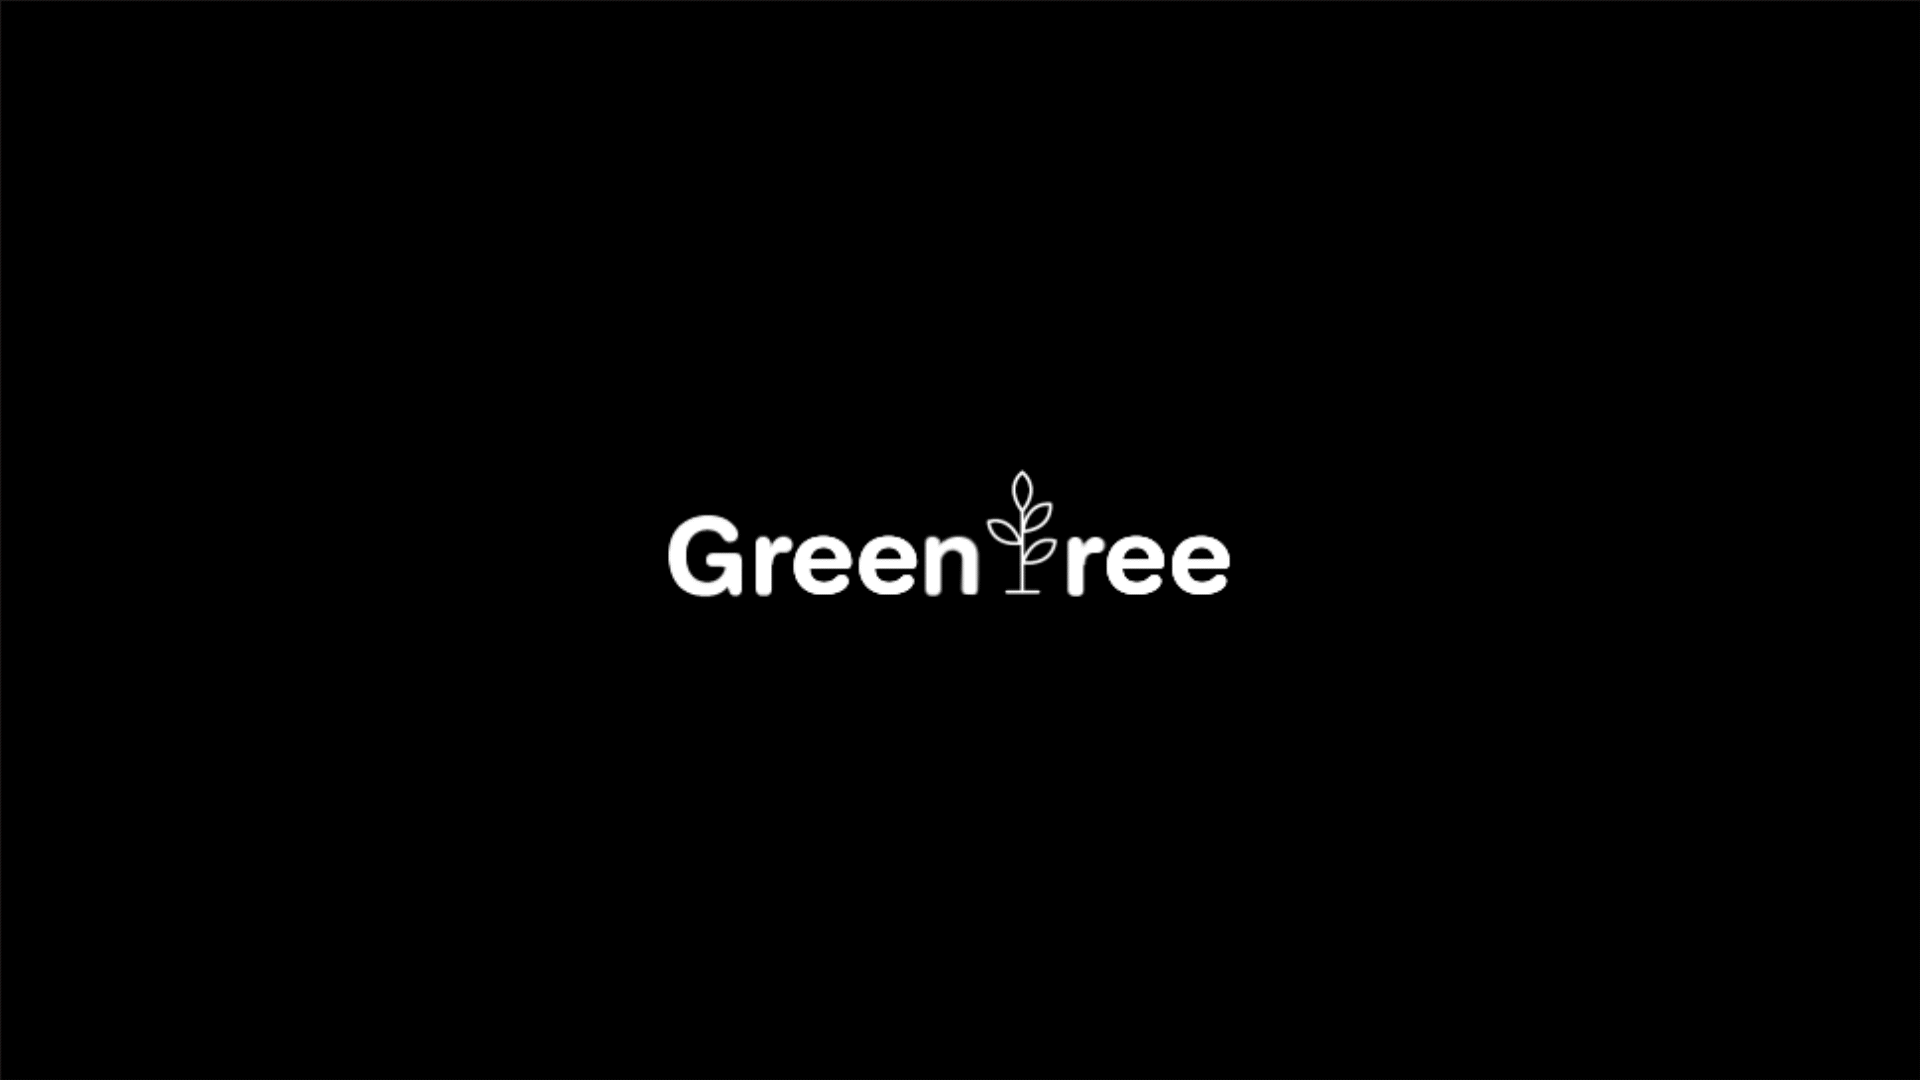 Green Tree Logo Animation🌴 2d logo animation animated logo animation branding css animation custom logo animation graphic design green tree logo animation🌴 illustration logo animateds logo animation logo intro outro youtube logo intro